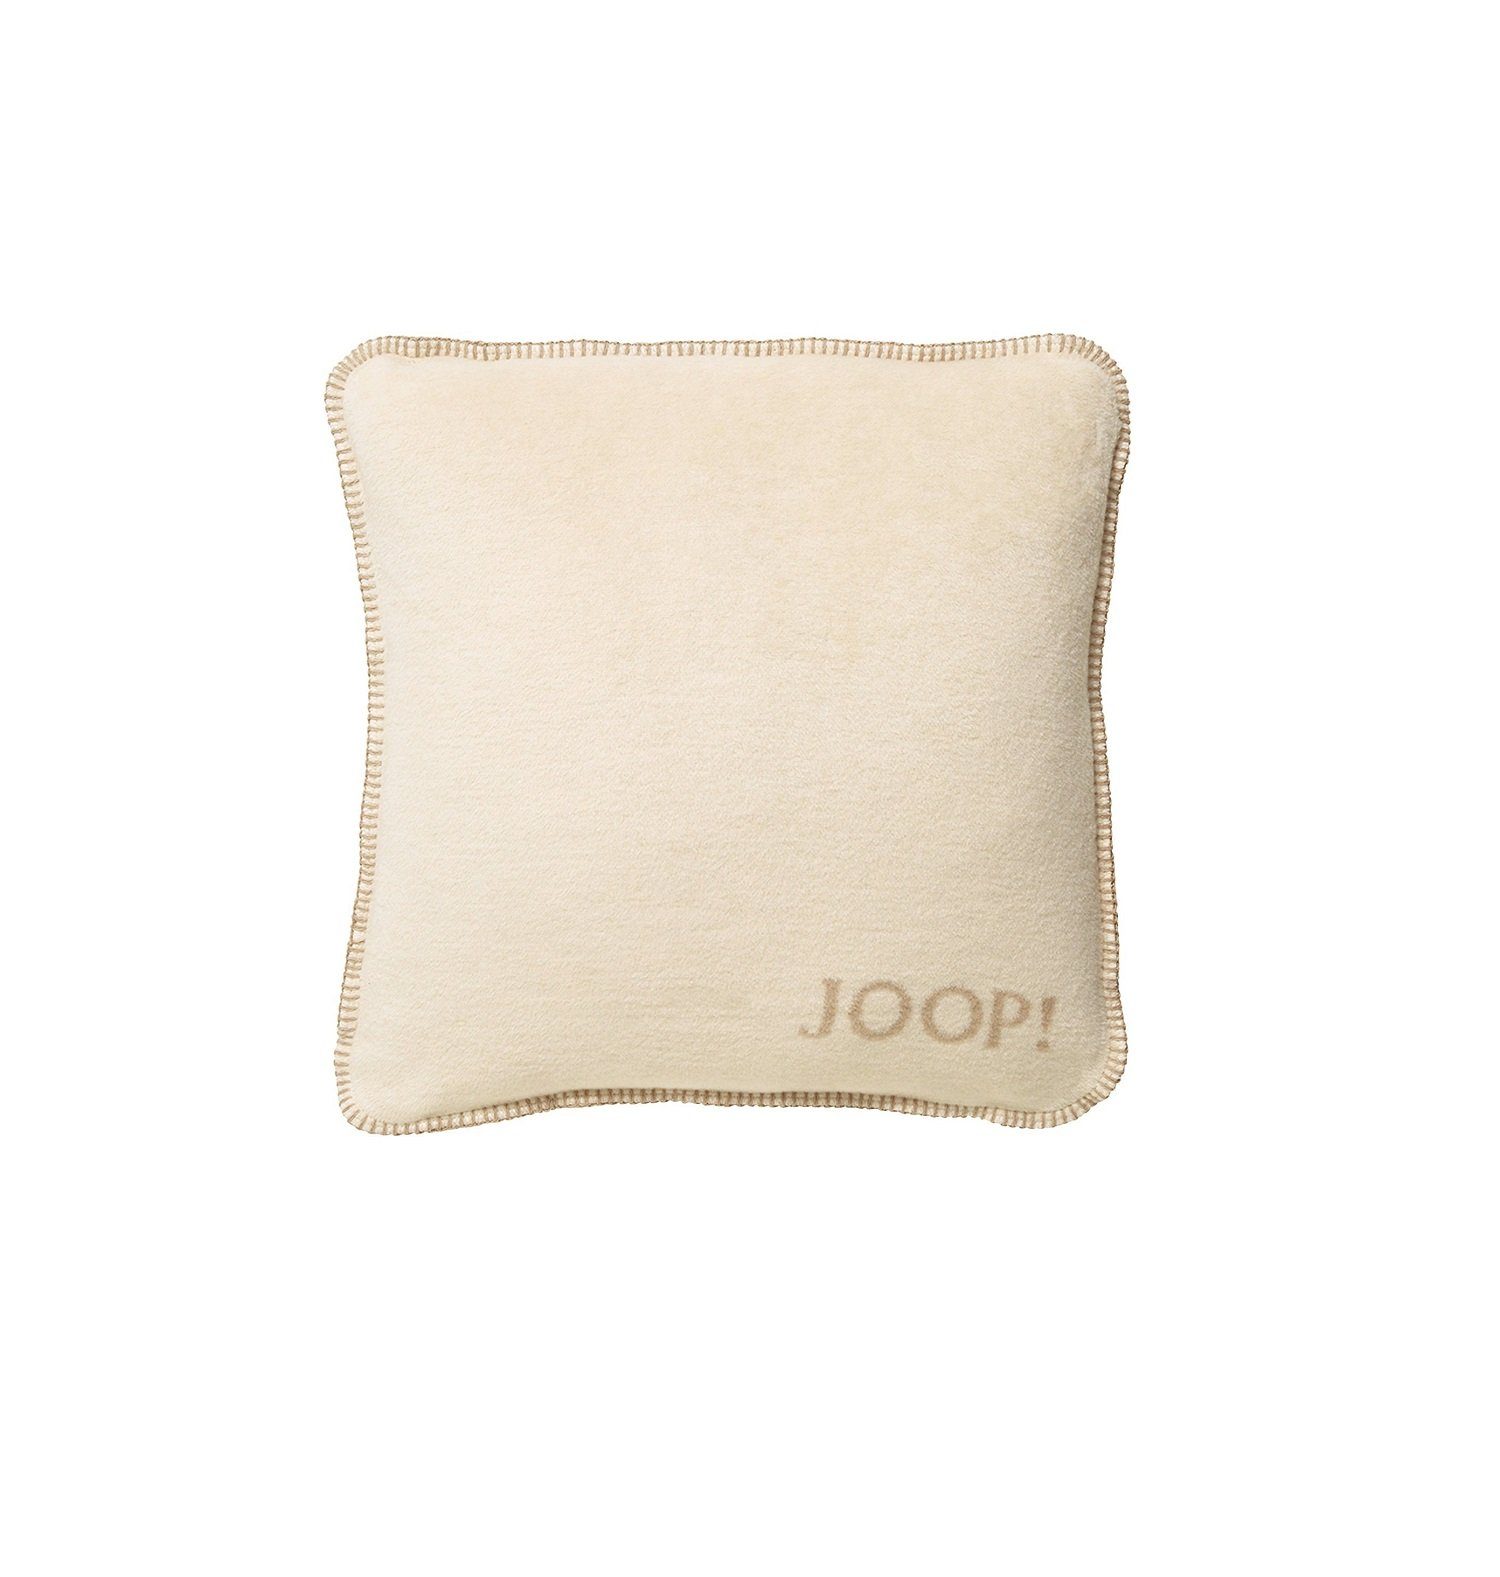 Uni-Doubleface Kissenhülle Fleece auf Reißverschluss Qualität, Joop!, Fleece JOOP! Qualität, weiche Kissenhülle Pergament-Sand Rückseite der